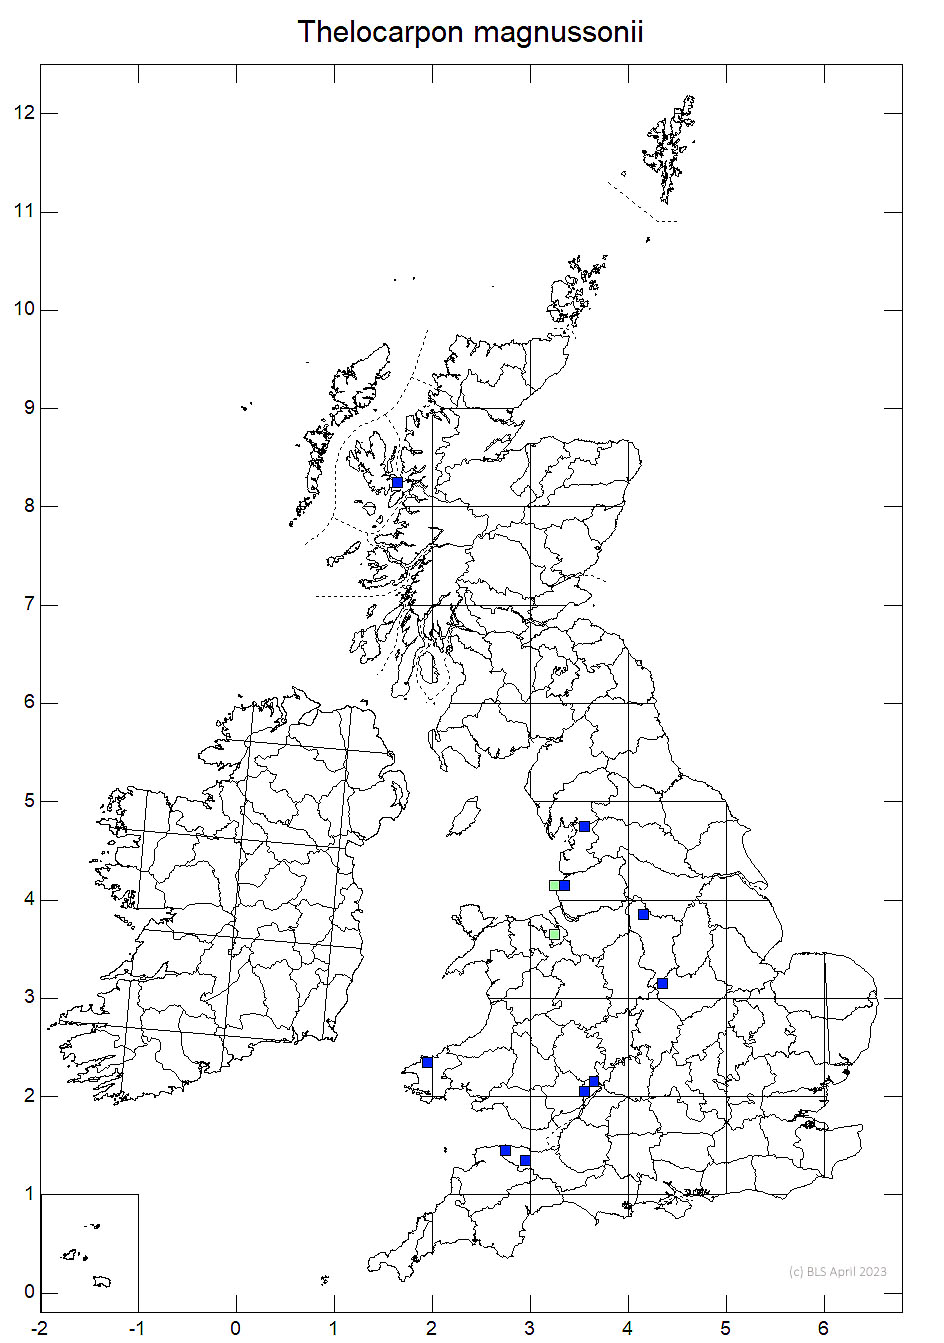 Thelocarpon magnussonii 10km sq distribution map